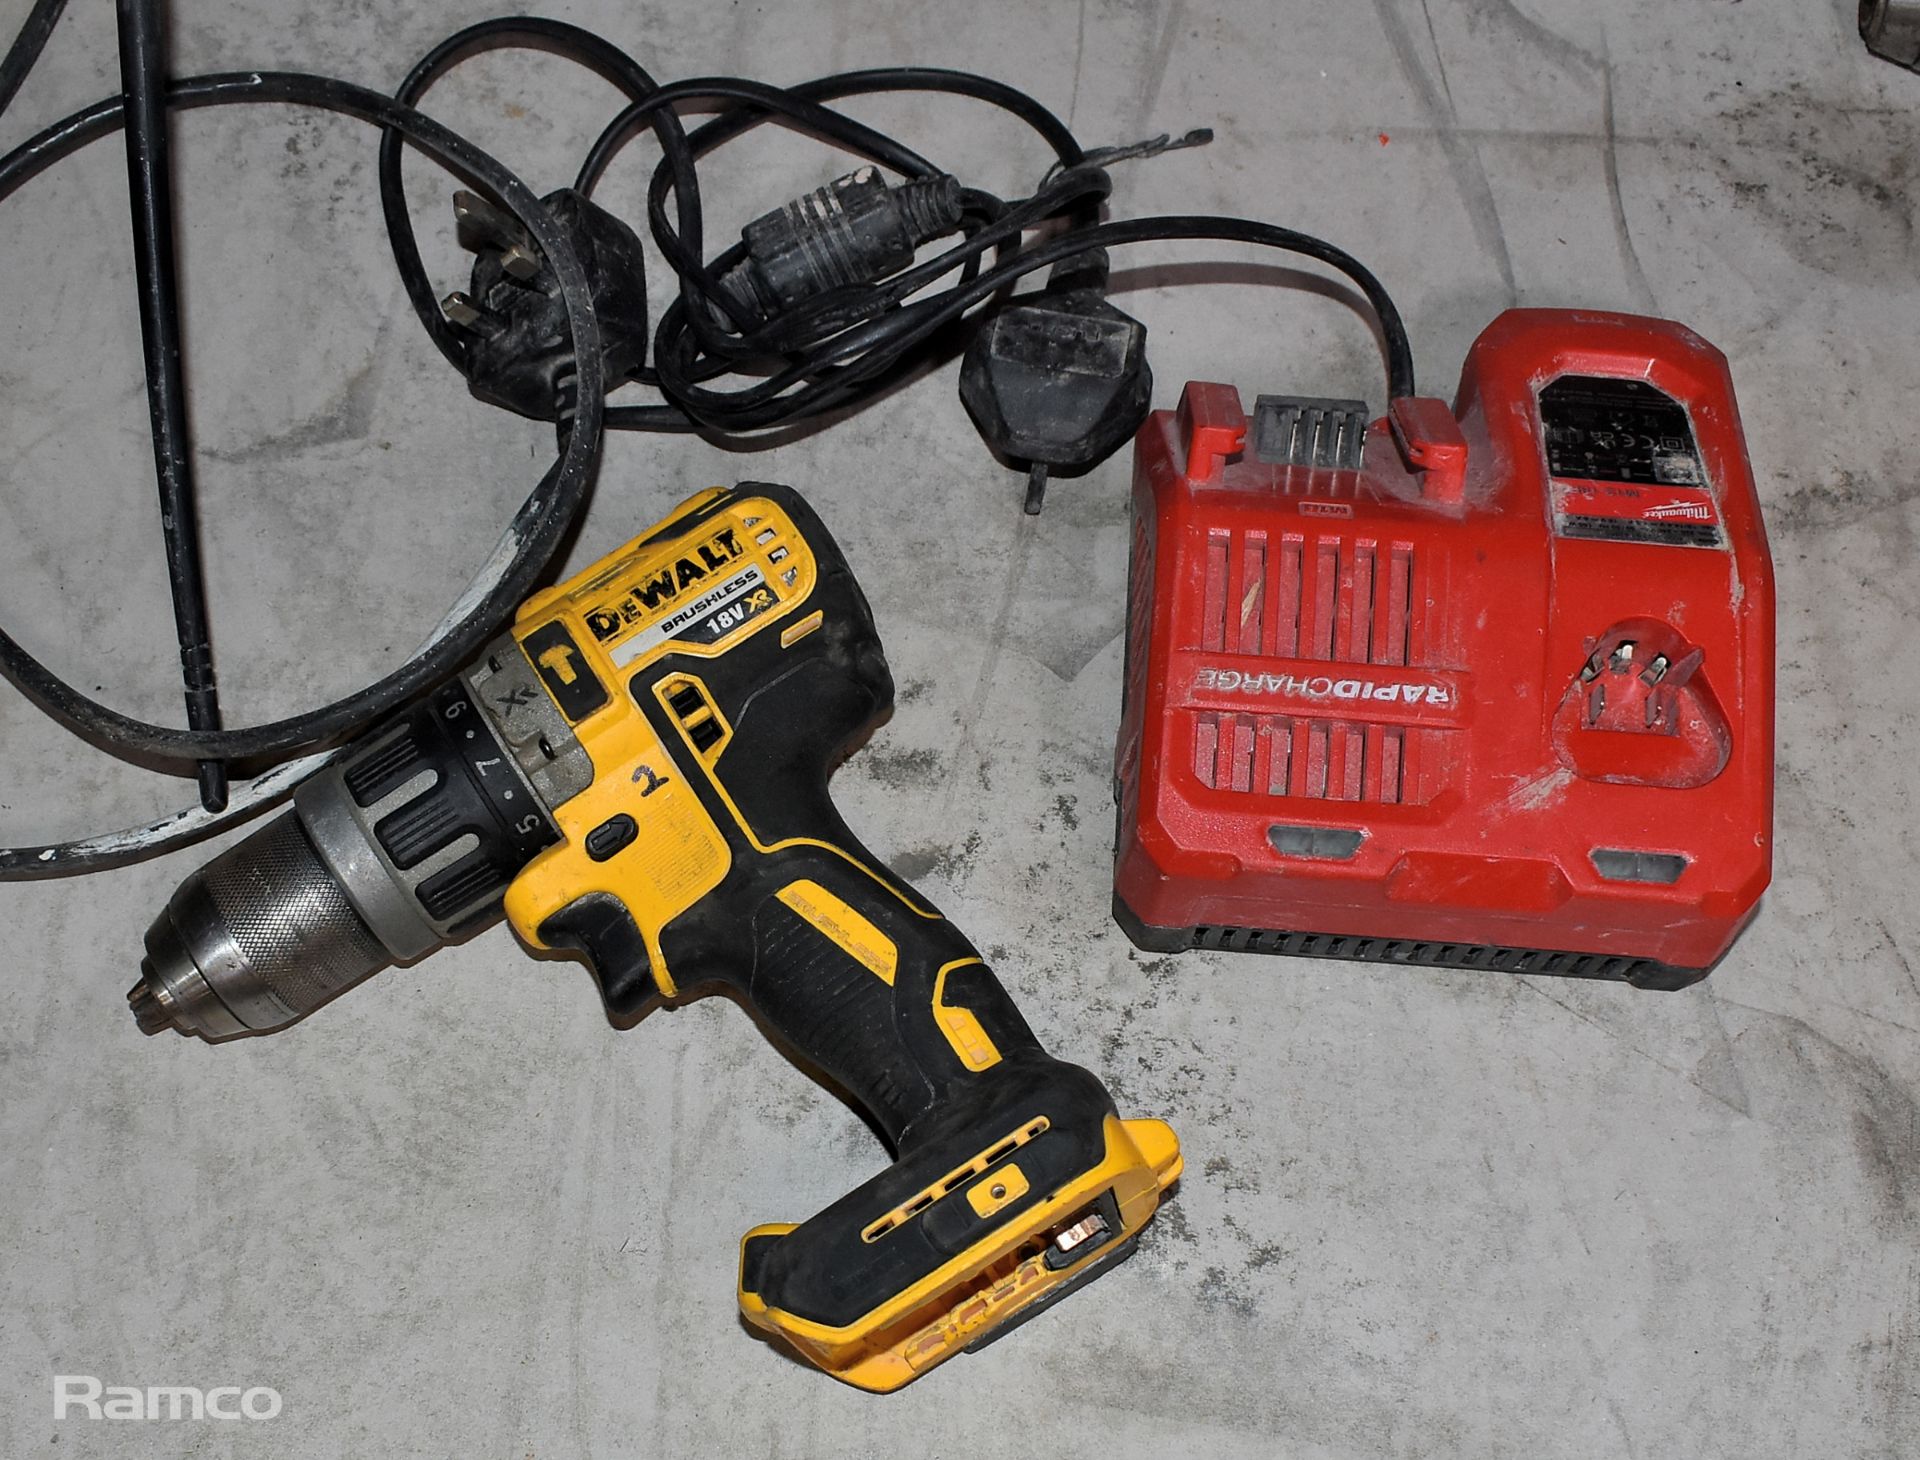 Cordless power tools - Milwaukee, Dewalt and Makita and Milwaukee C1228 DCR radio - Image 7 of 10